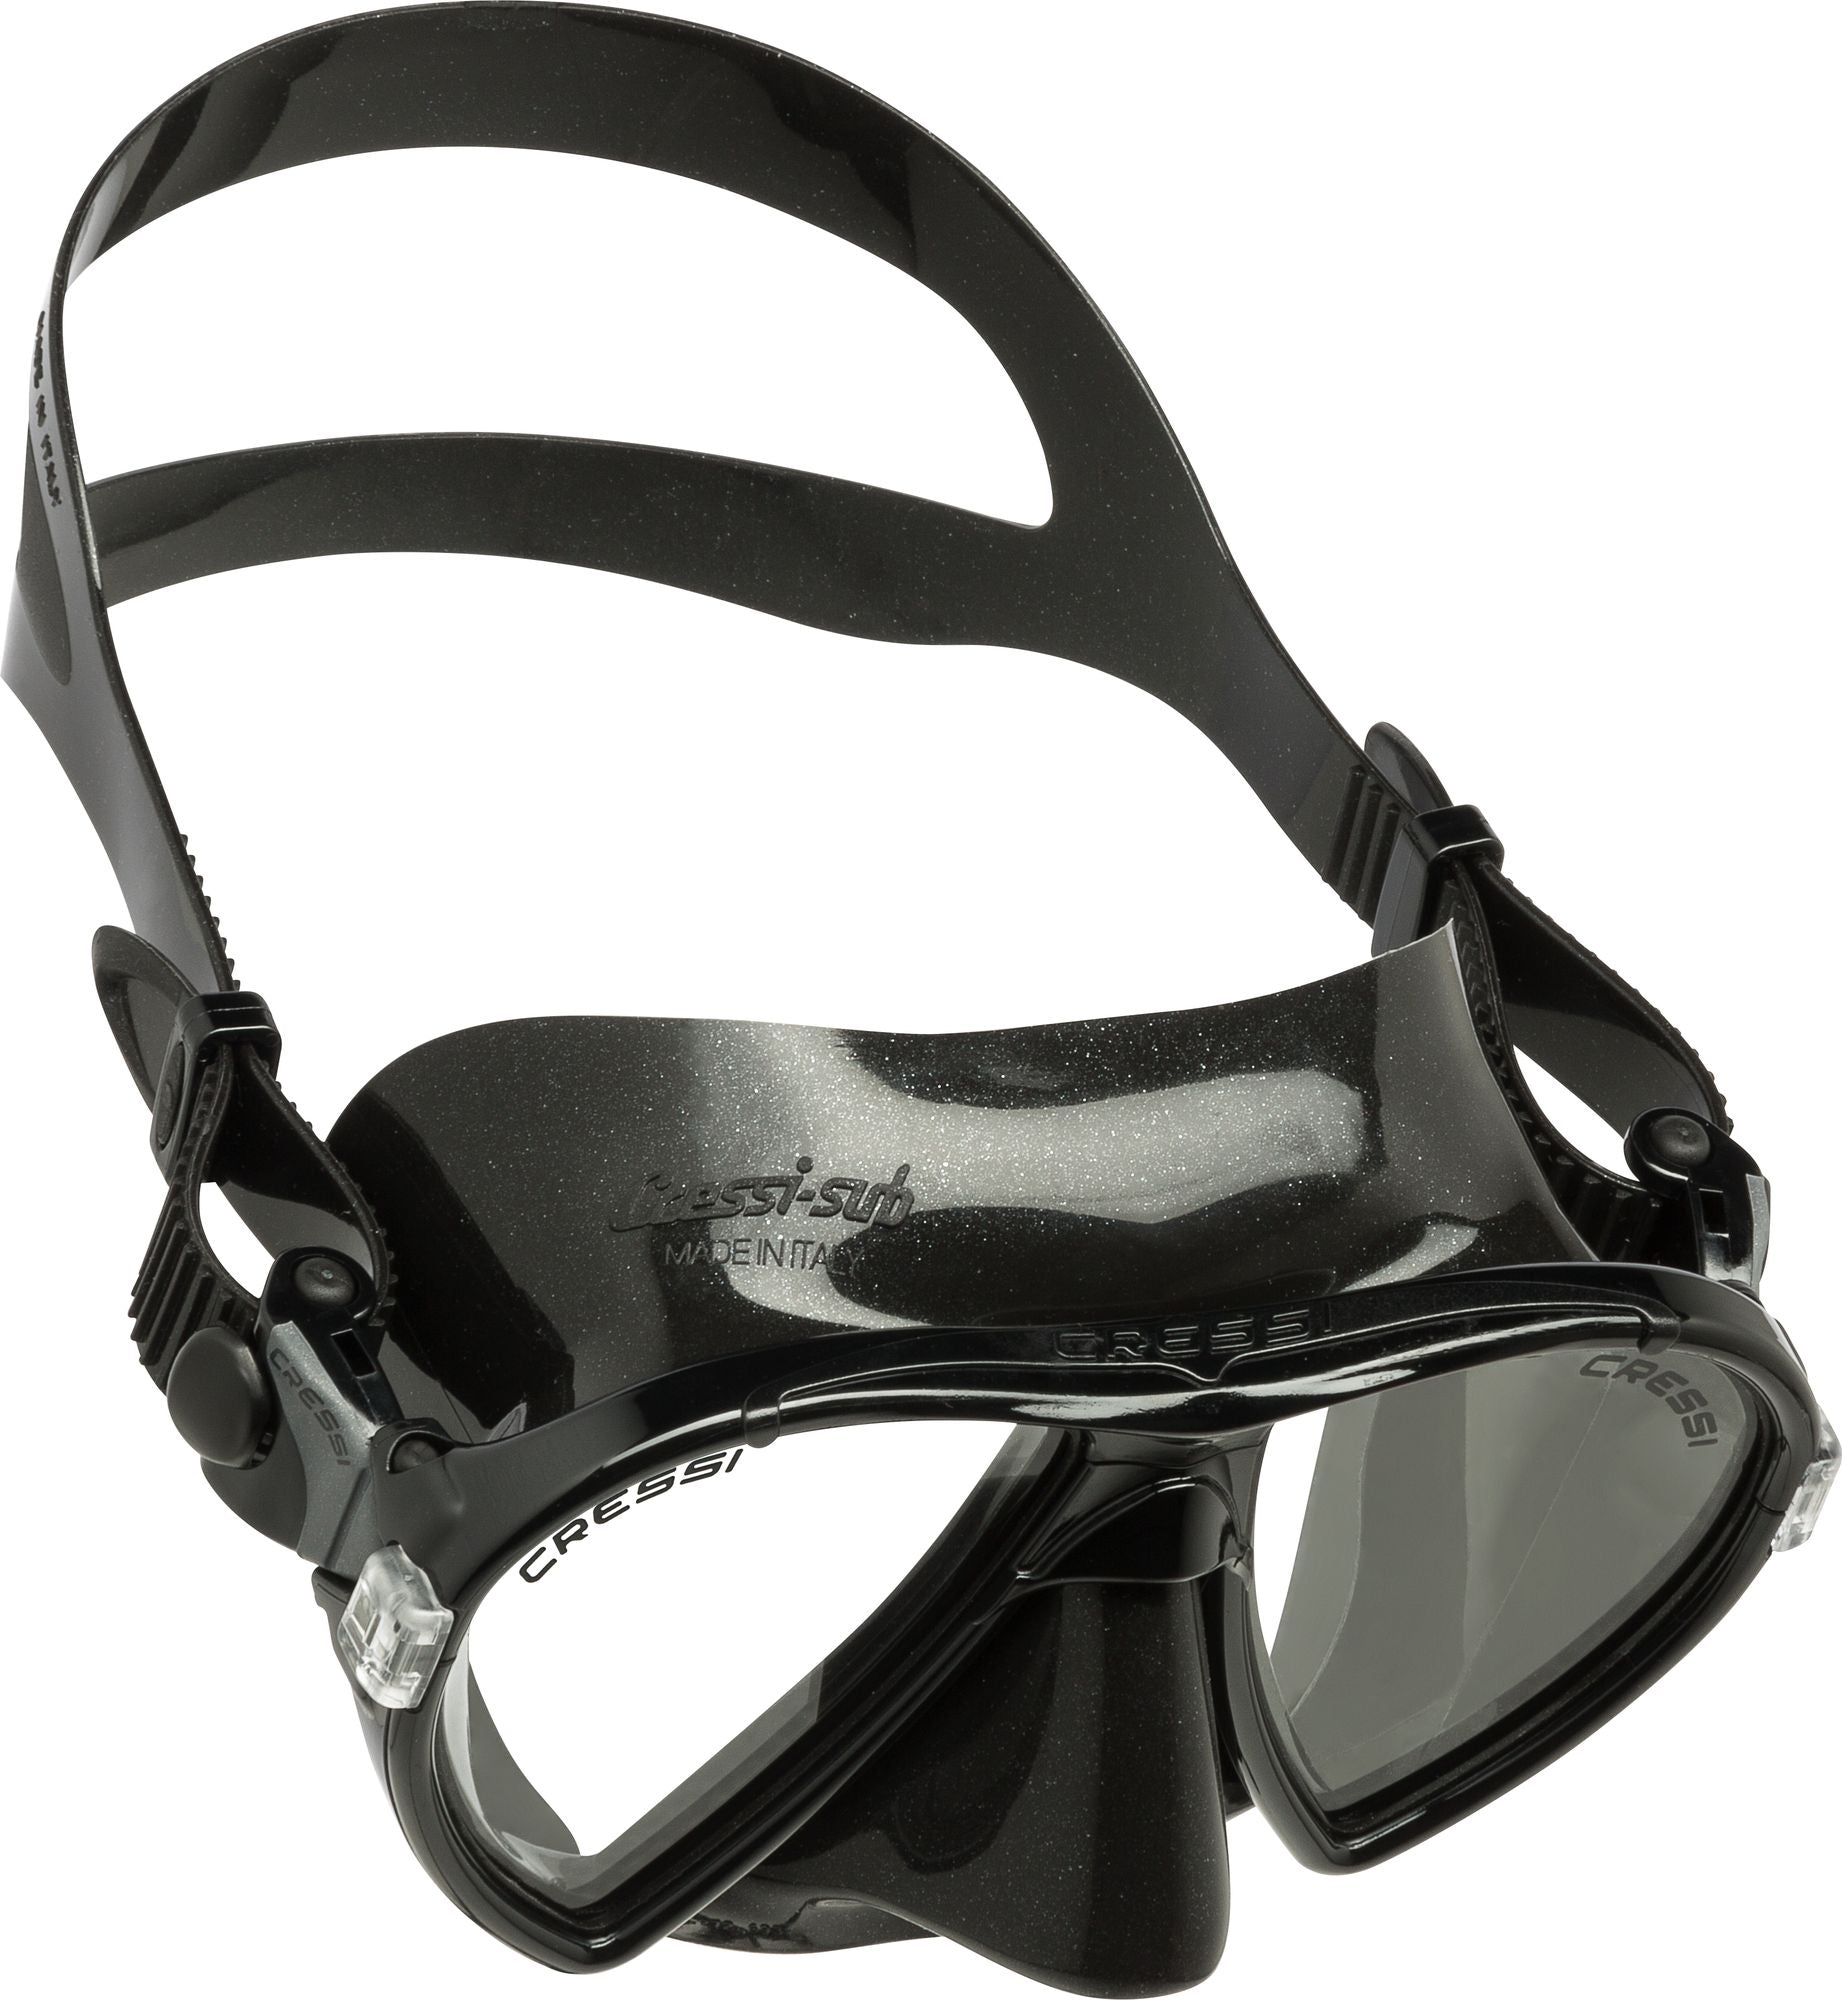 Ocean Mask - Scuba mask, Snorkelling mask